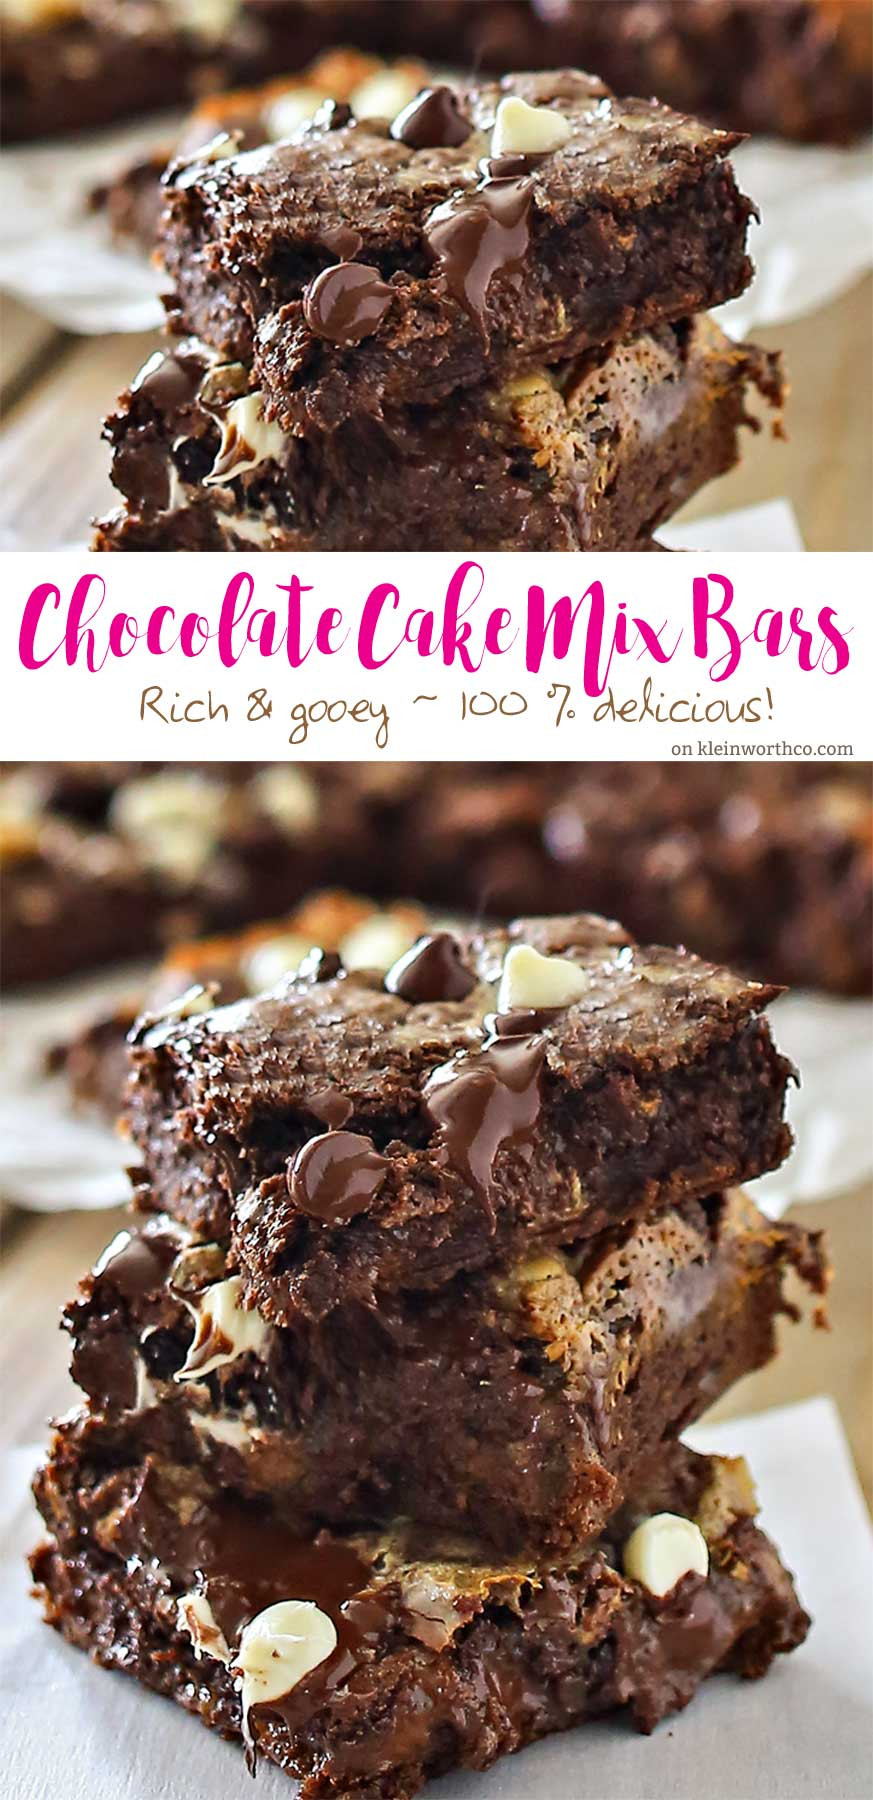 Chocolate Cake Mix Recipes
 Chocolate Cake Mix Bars Kleinworth & Co